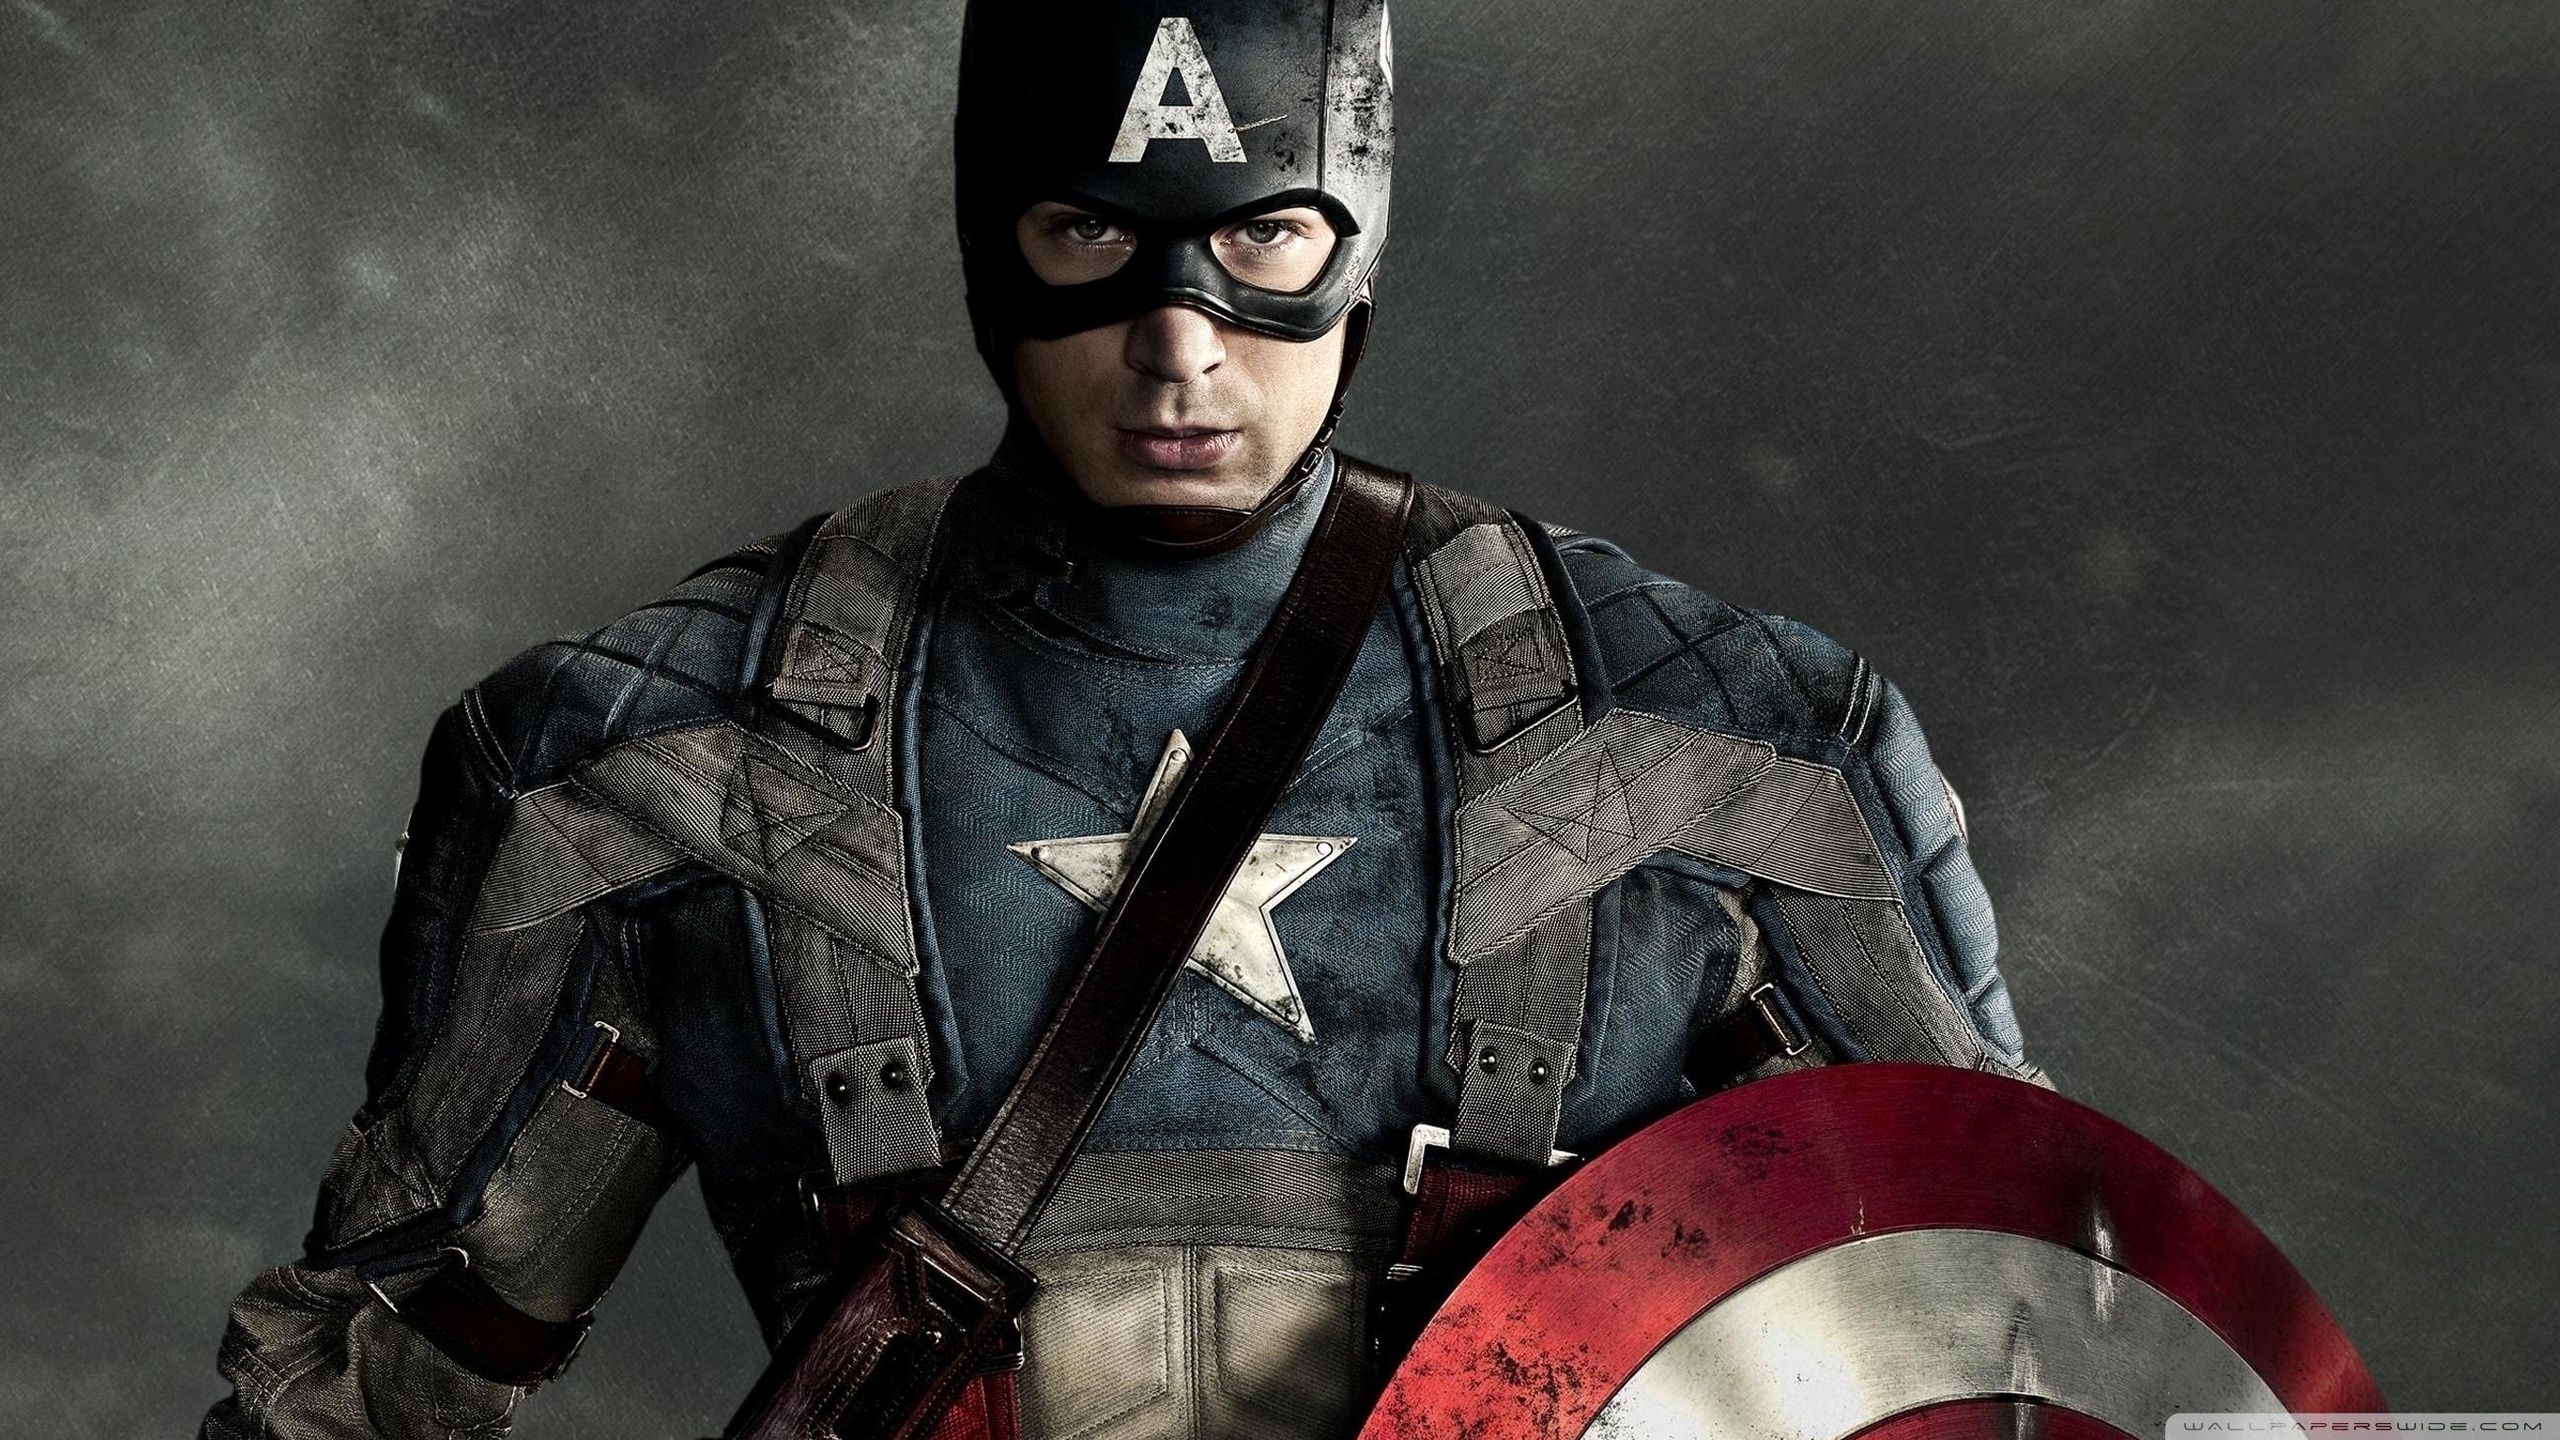 Captain America Images.jpg